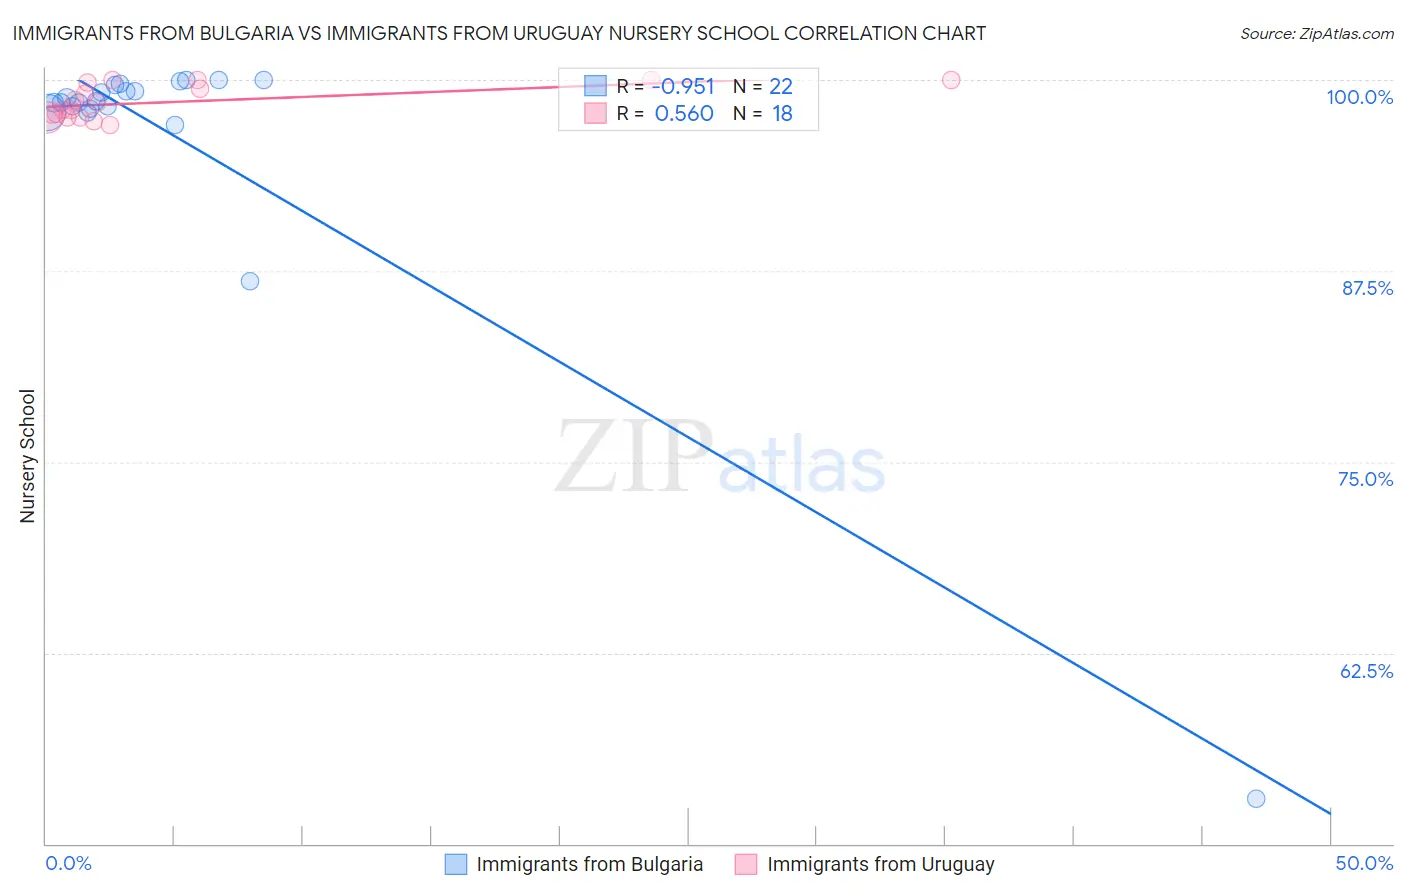 Immigrants from Bulgaria vs Immigrants from Uruguay Nursery School